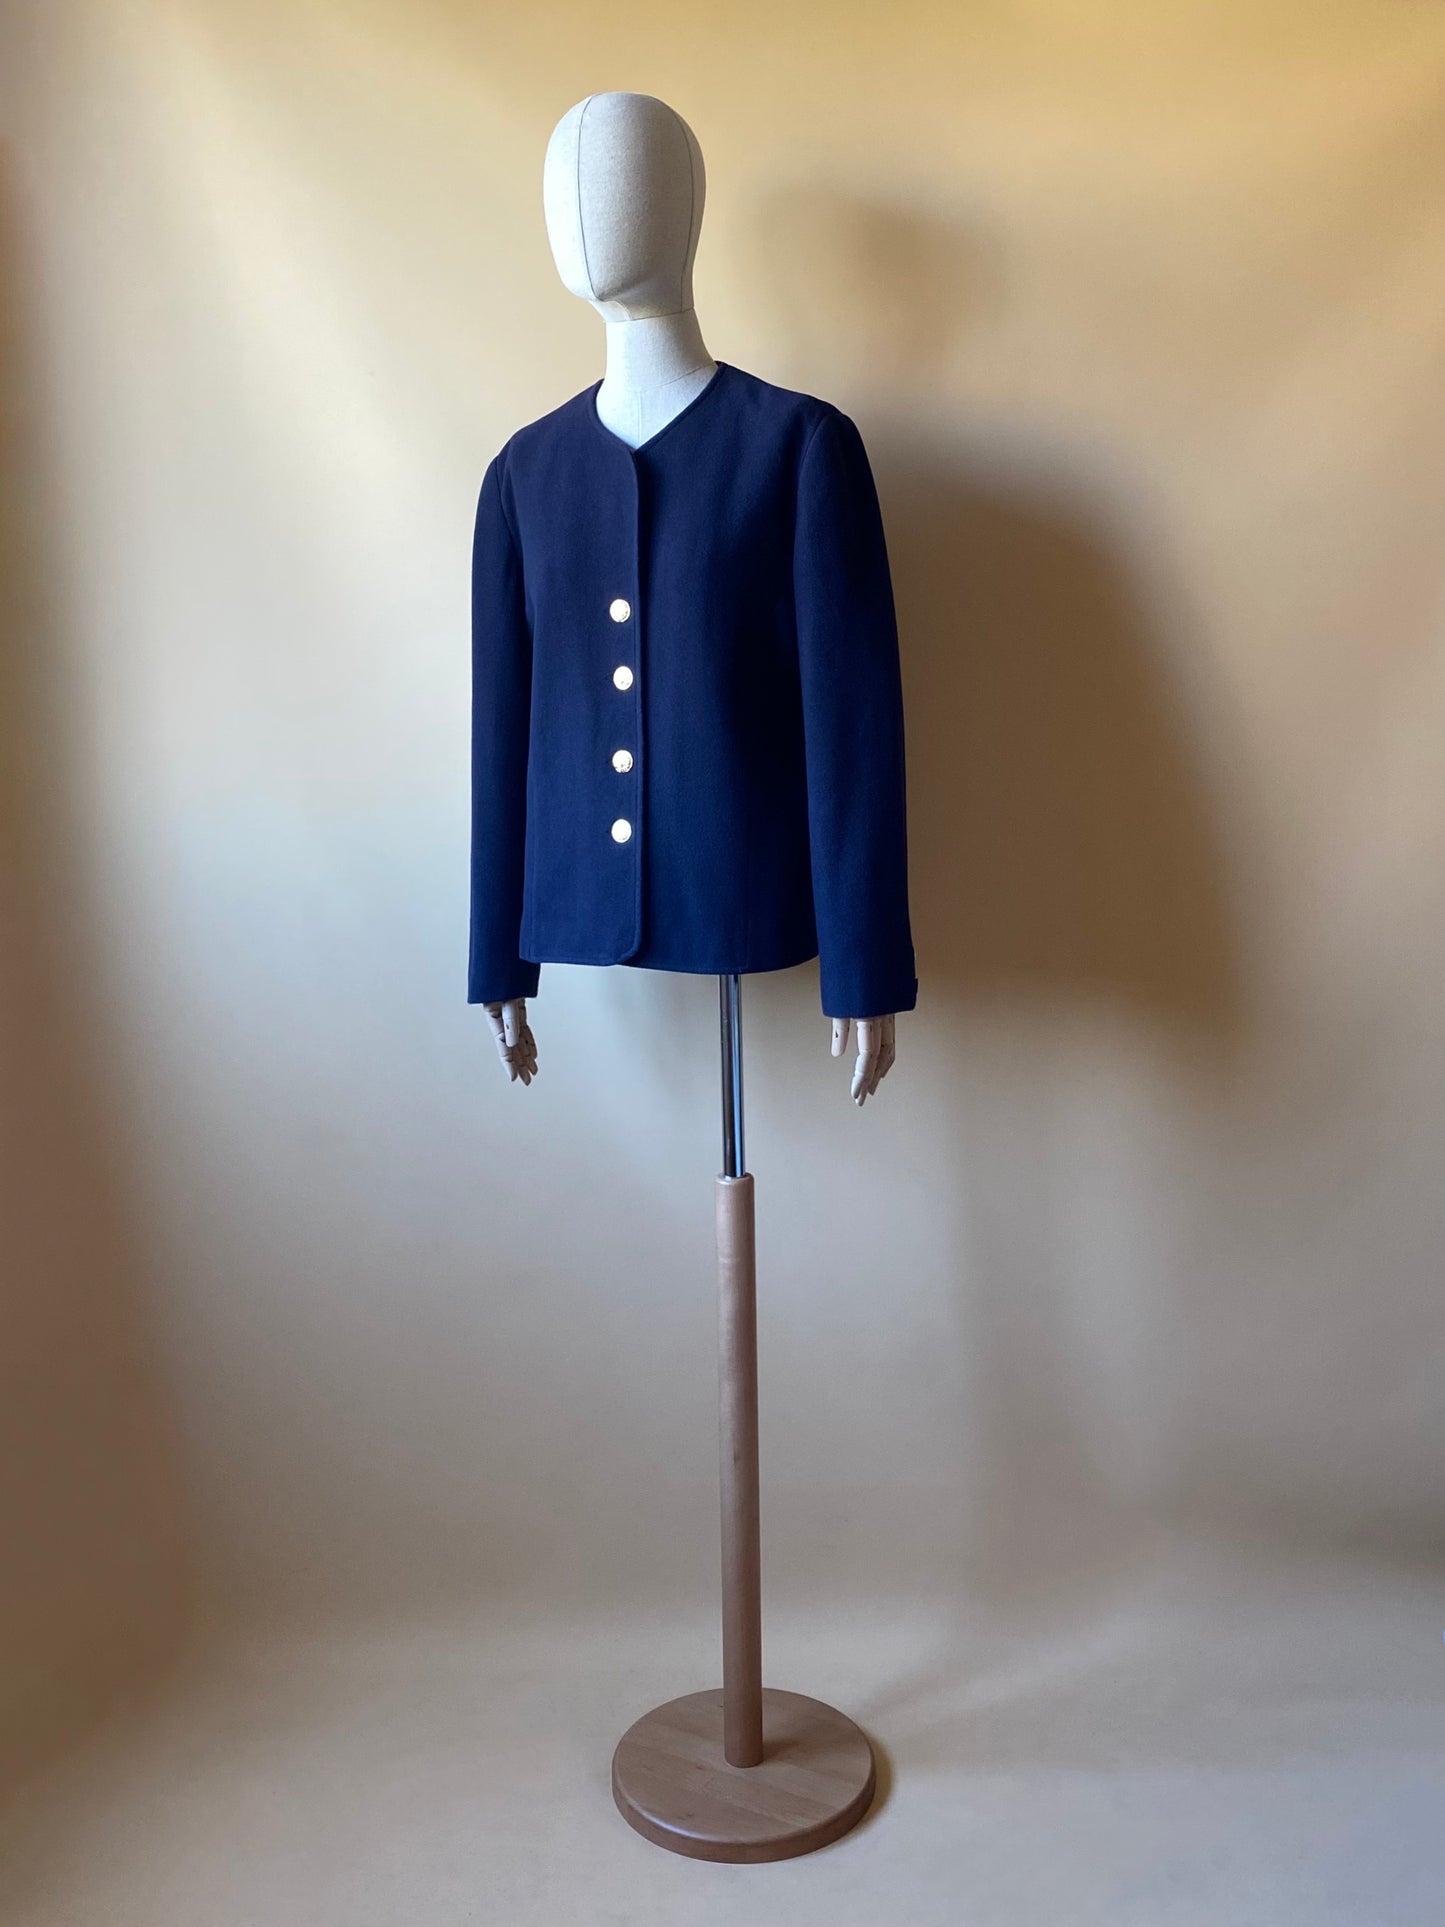 Vintage British Wool and Cashmere Jacket